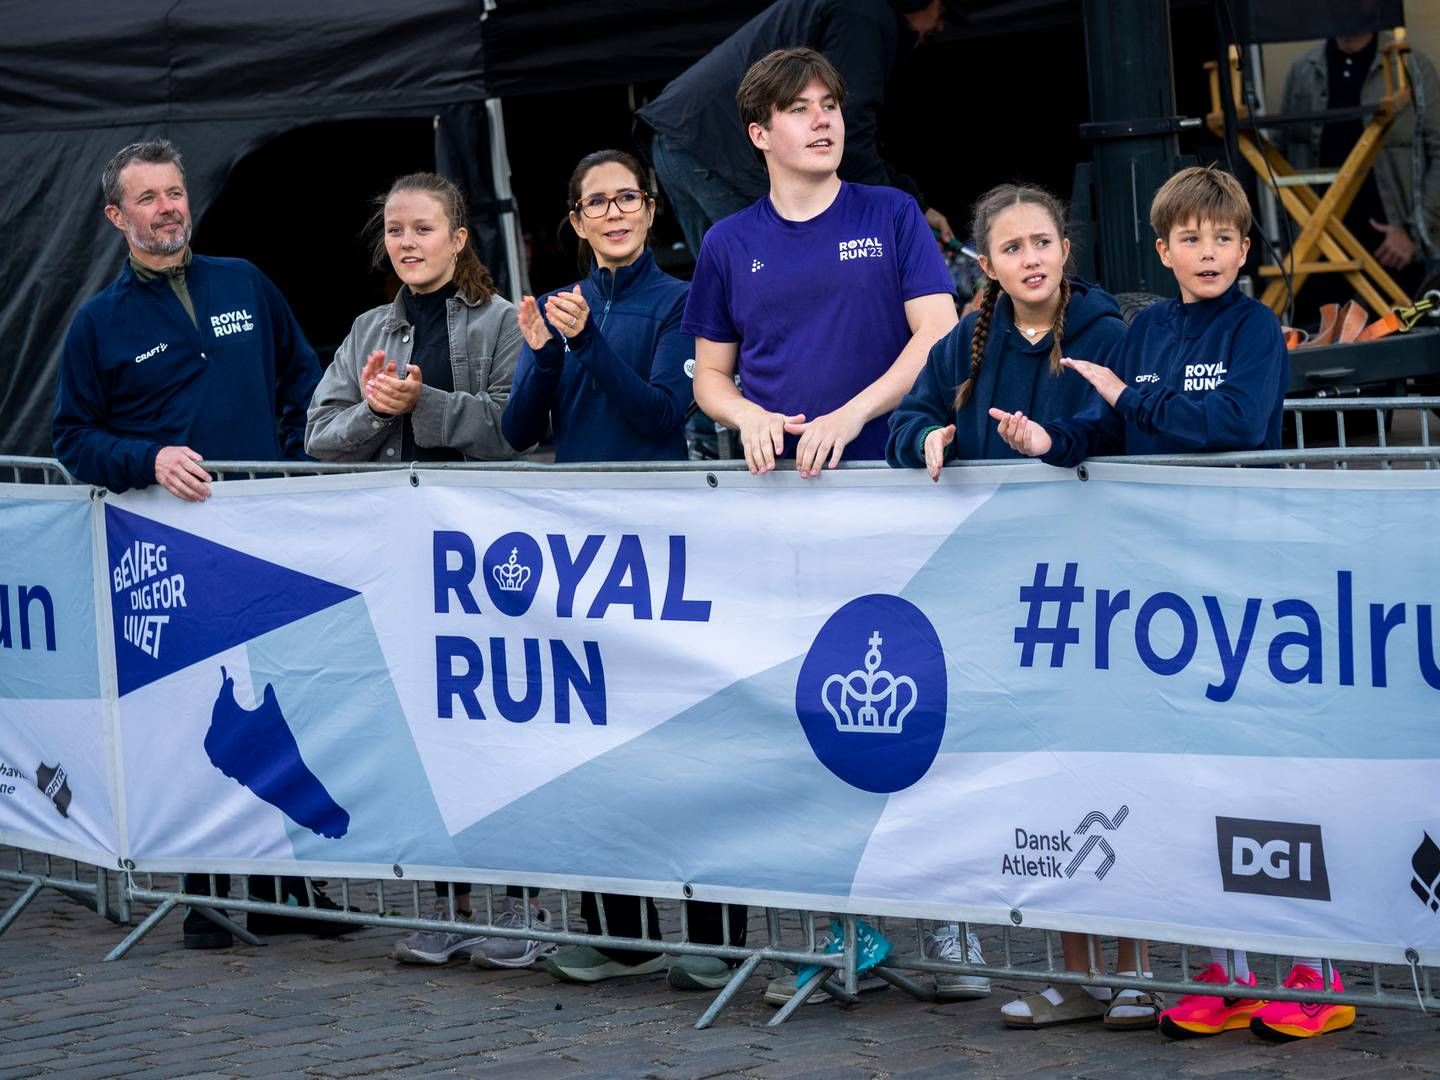 Kronprinsfamilien ved årets Royal Run. | Foto: Ida Marie Odgaard/Ritzau Scanpix